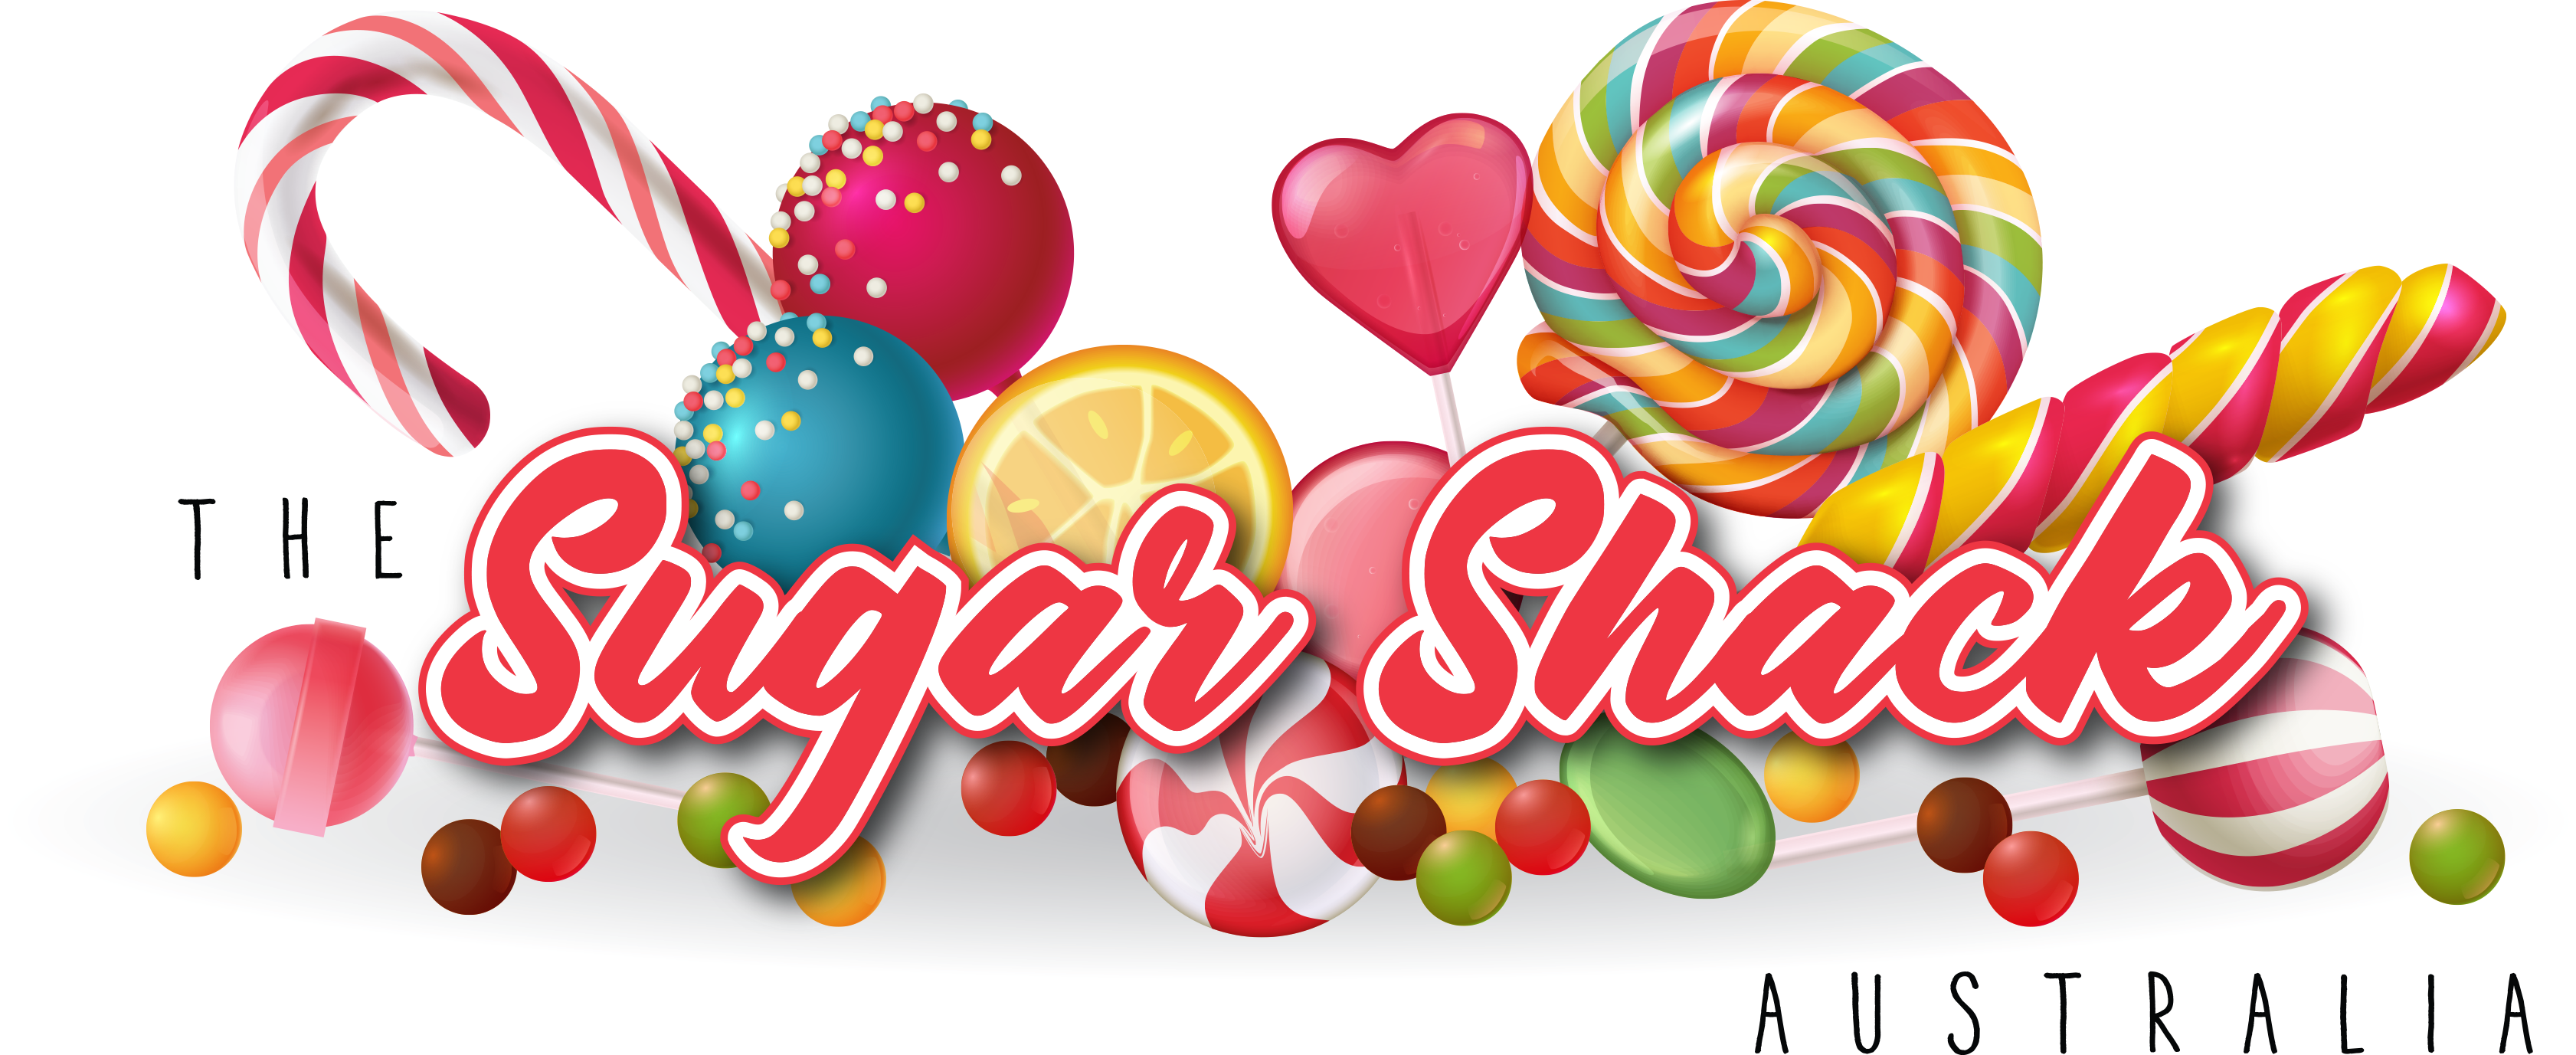 The Sugar Shack